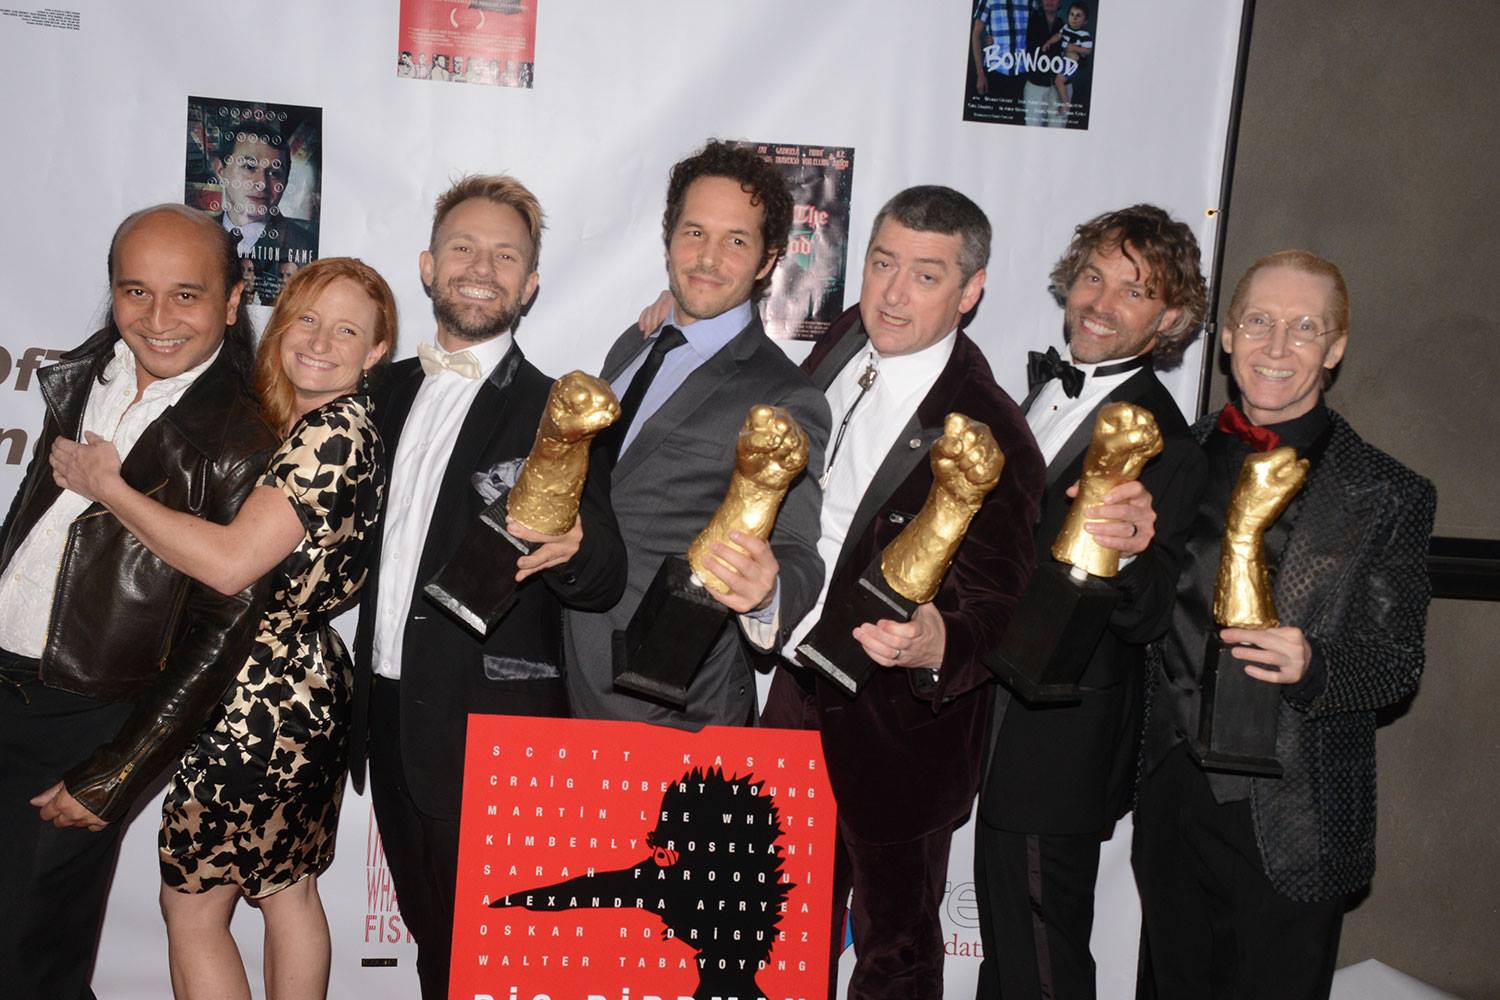 TOSCARS 2015 - Big Birdman wins 6 awards